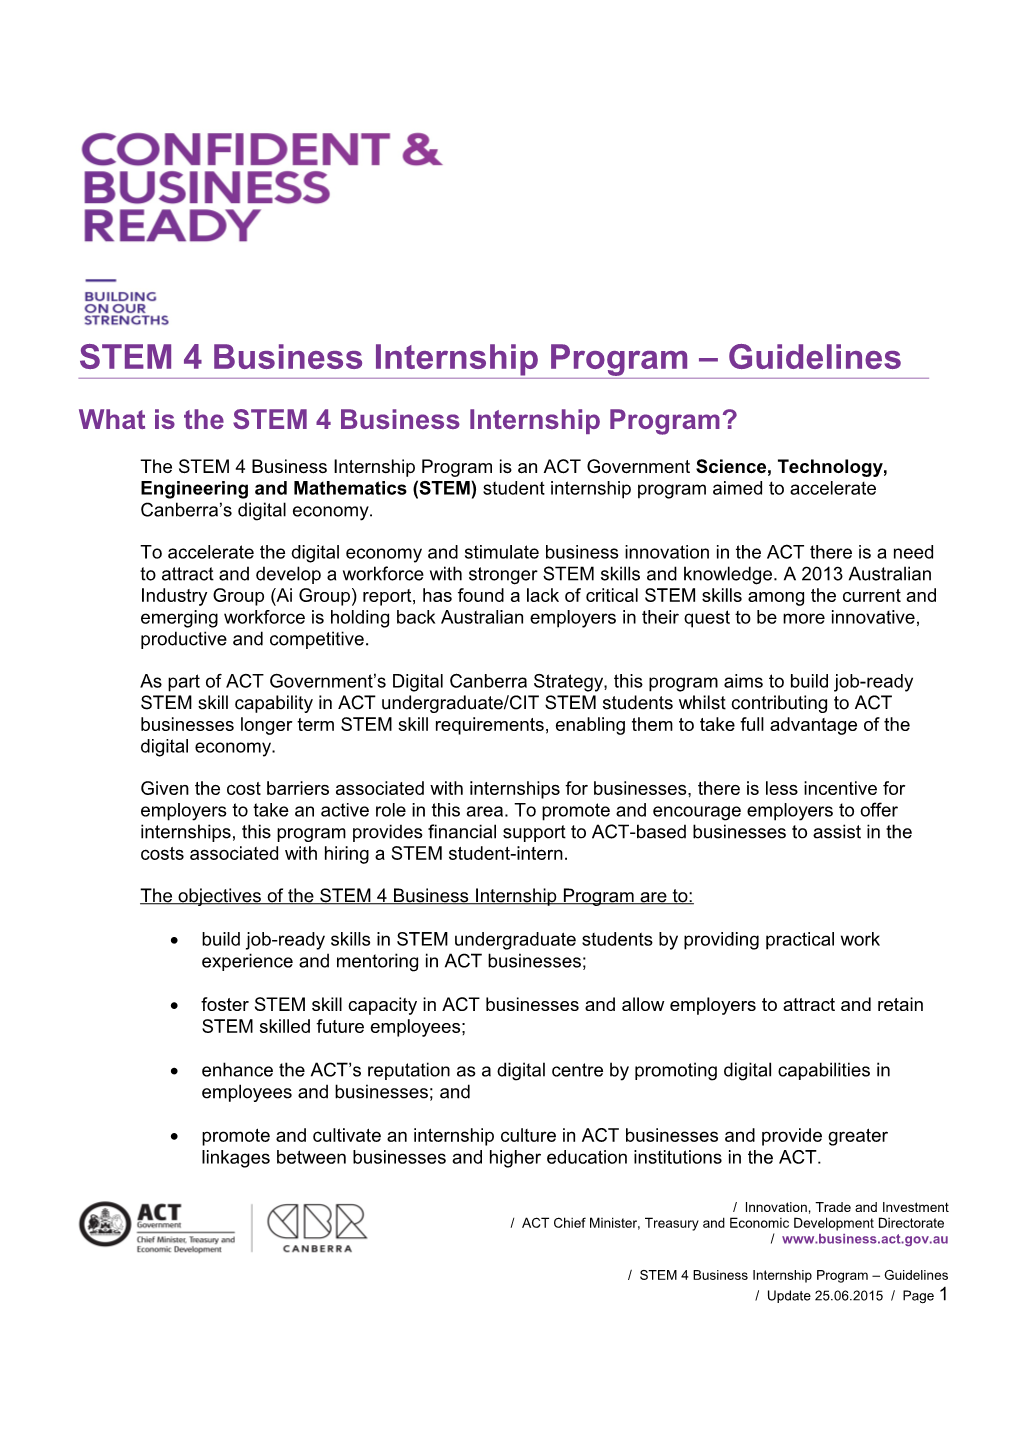 STEM 4 Business Internship Guidelines